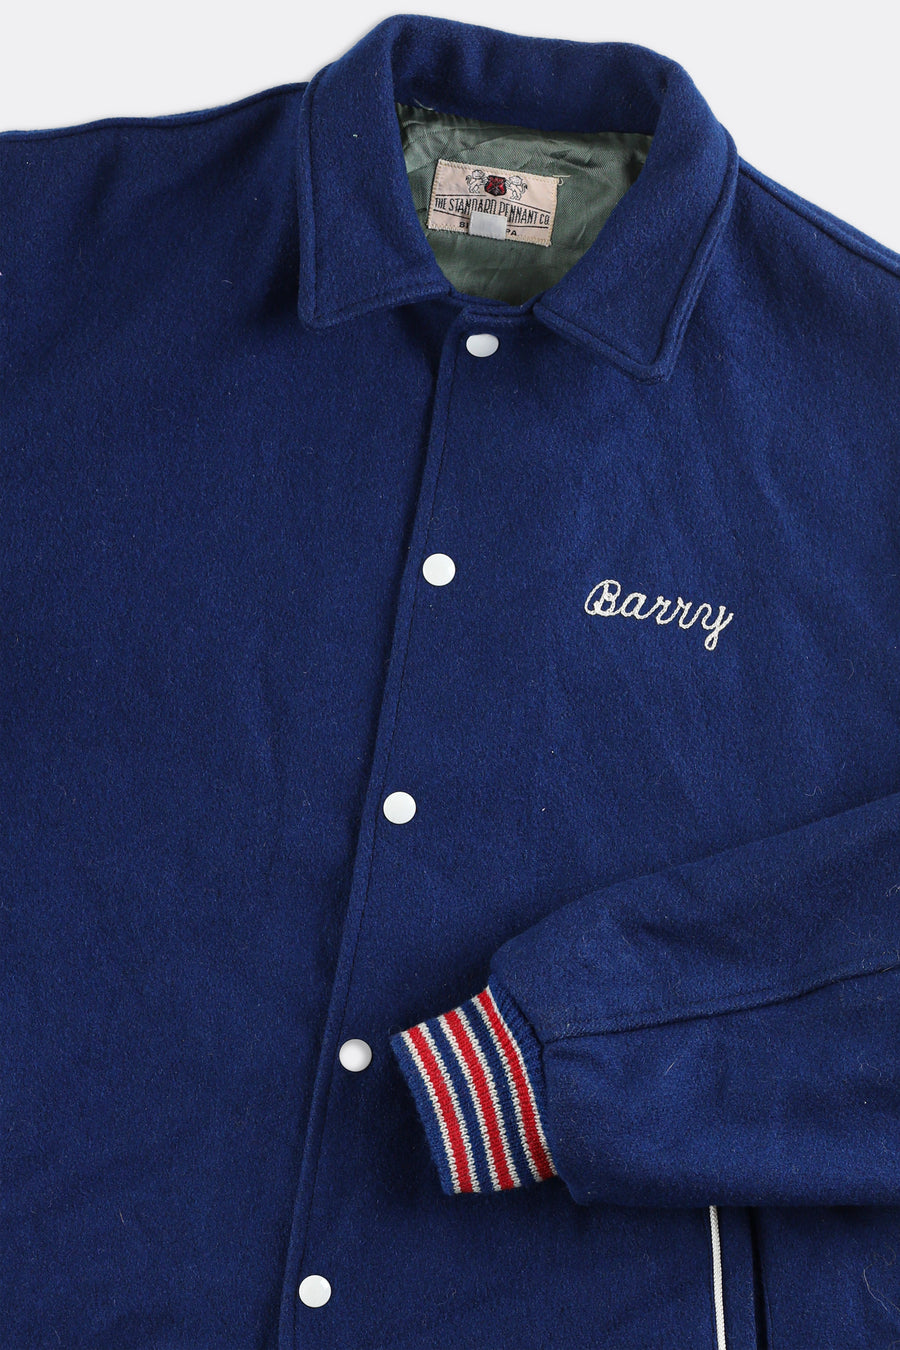 Vintage Varsity Jacket